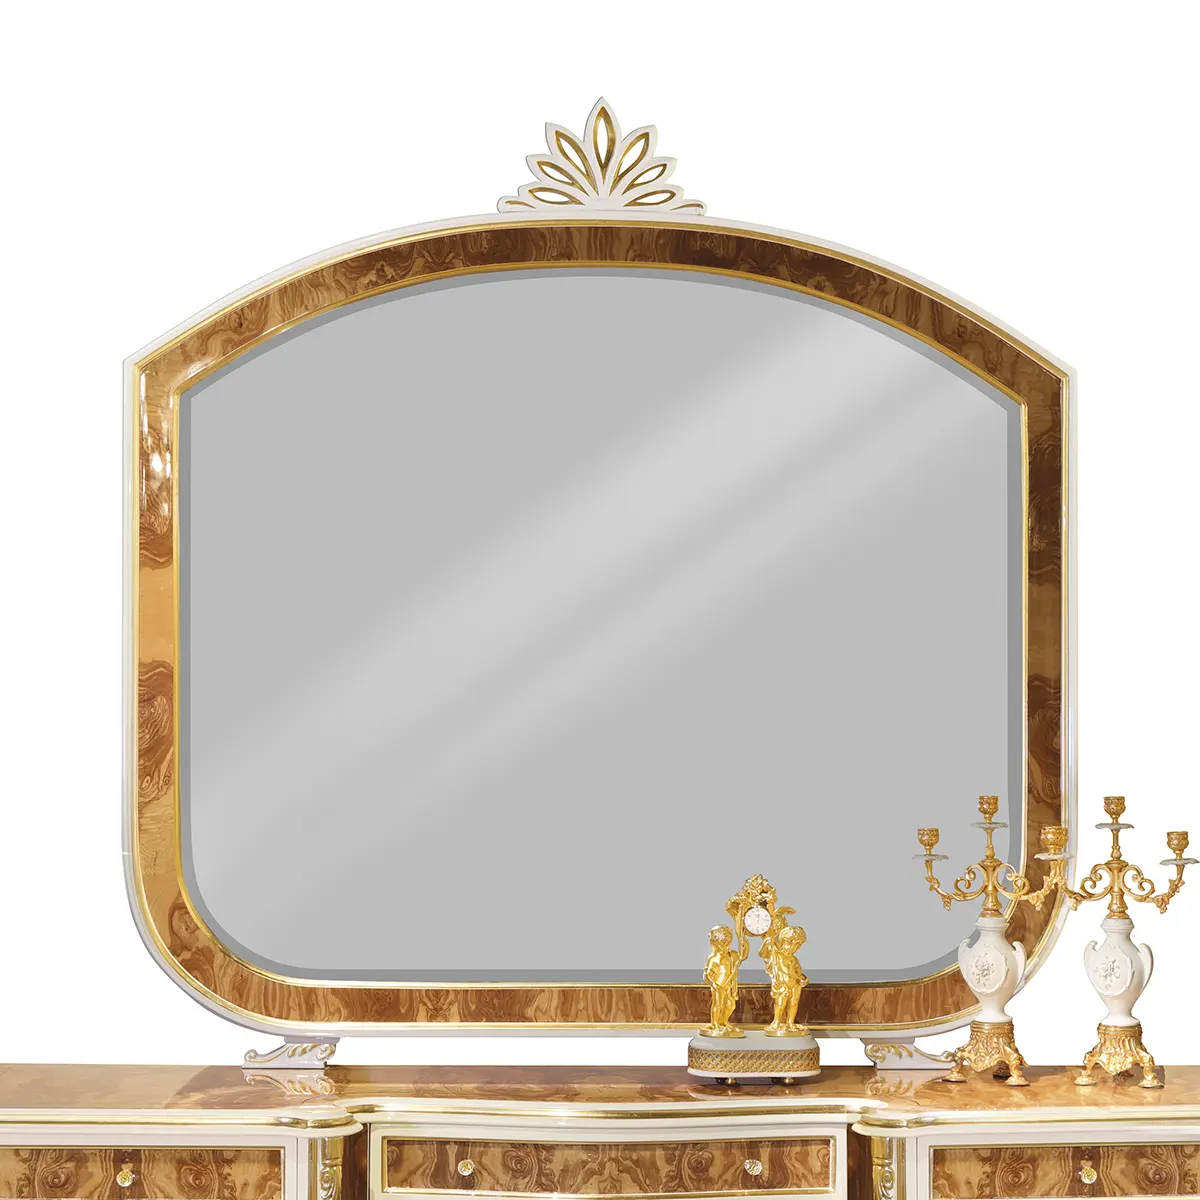 Alba mirror